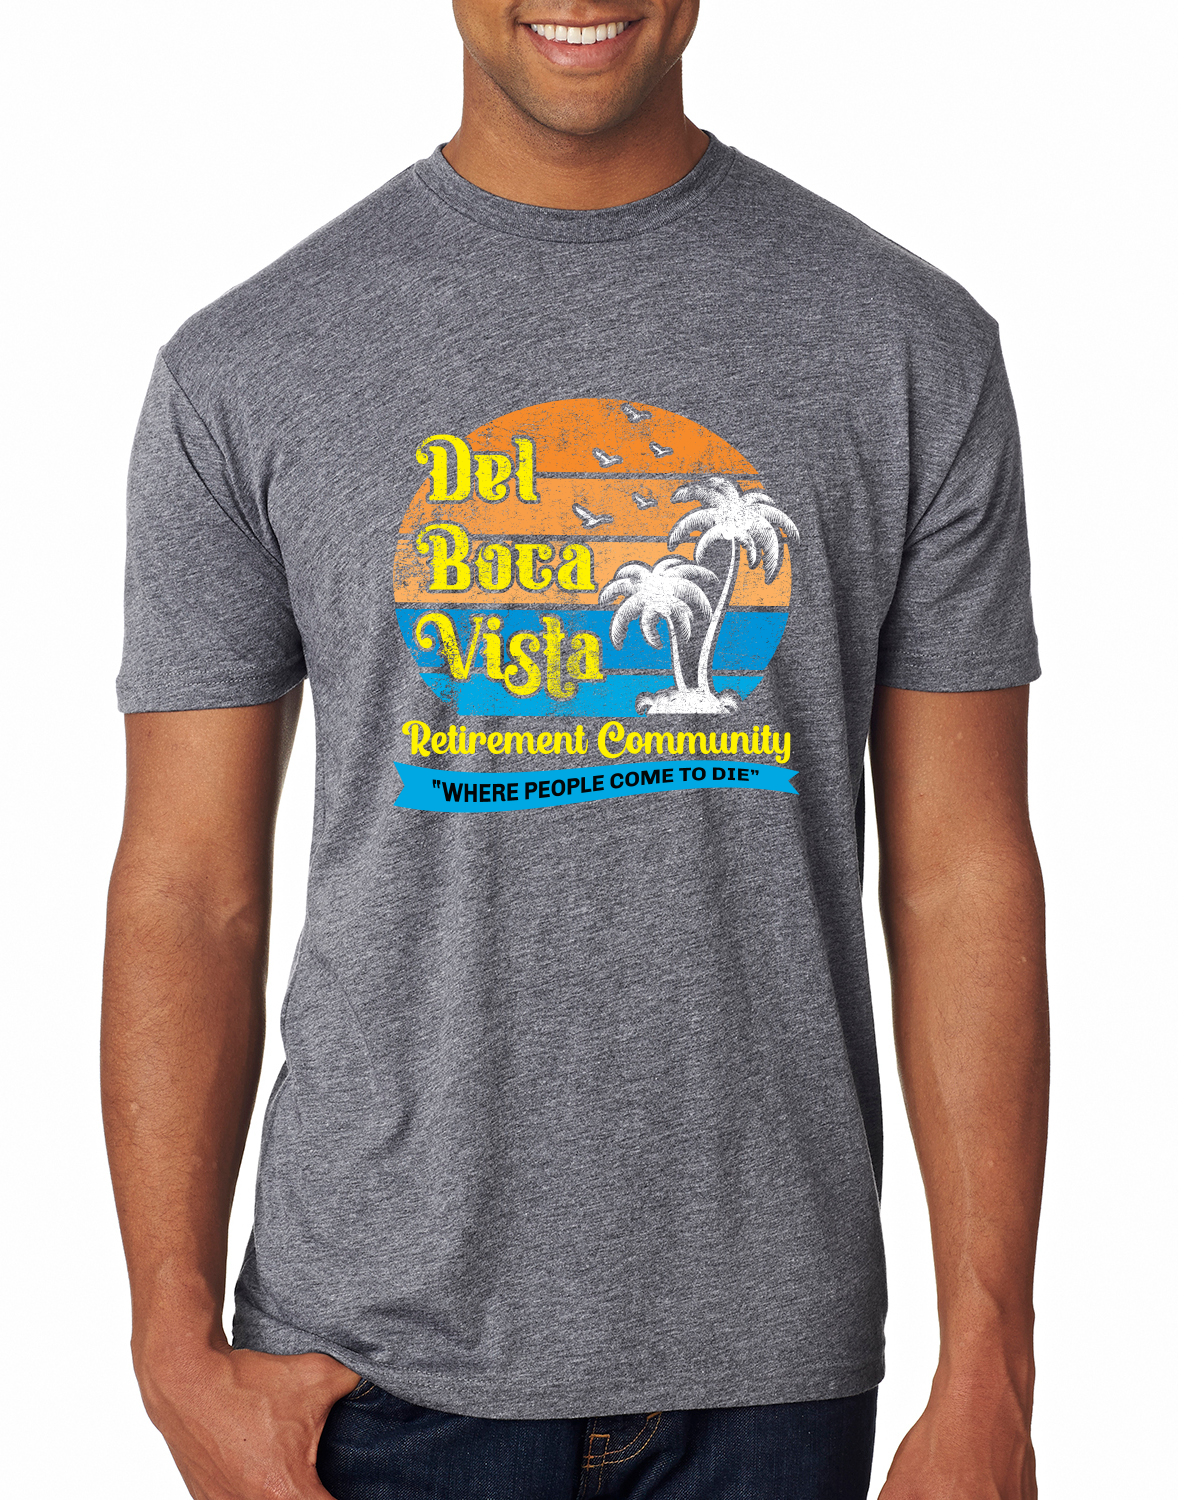 Del Boca Vista Seinfeld Retirement Community Mens Tri Blend T-Shirt | eBay